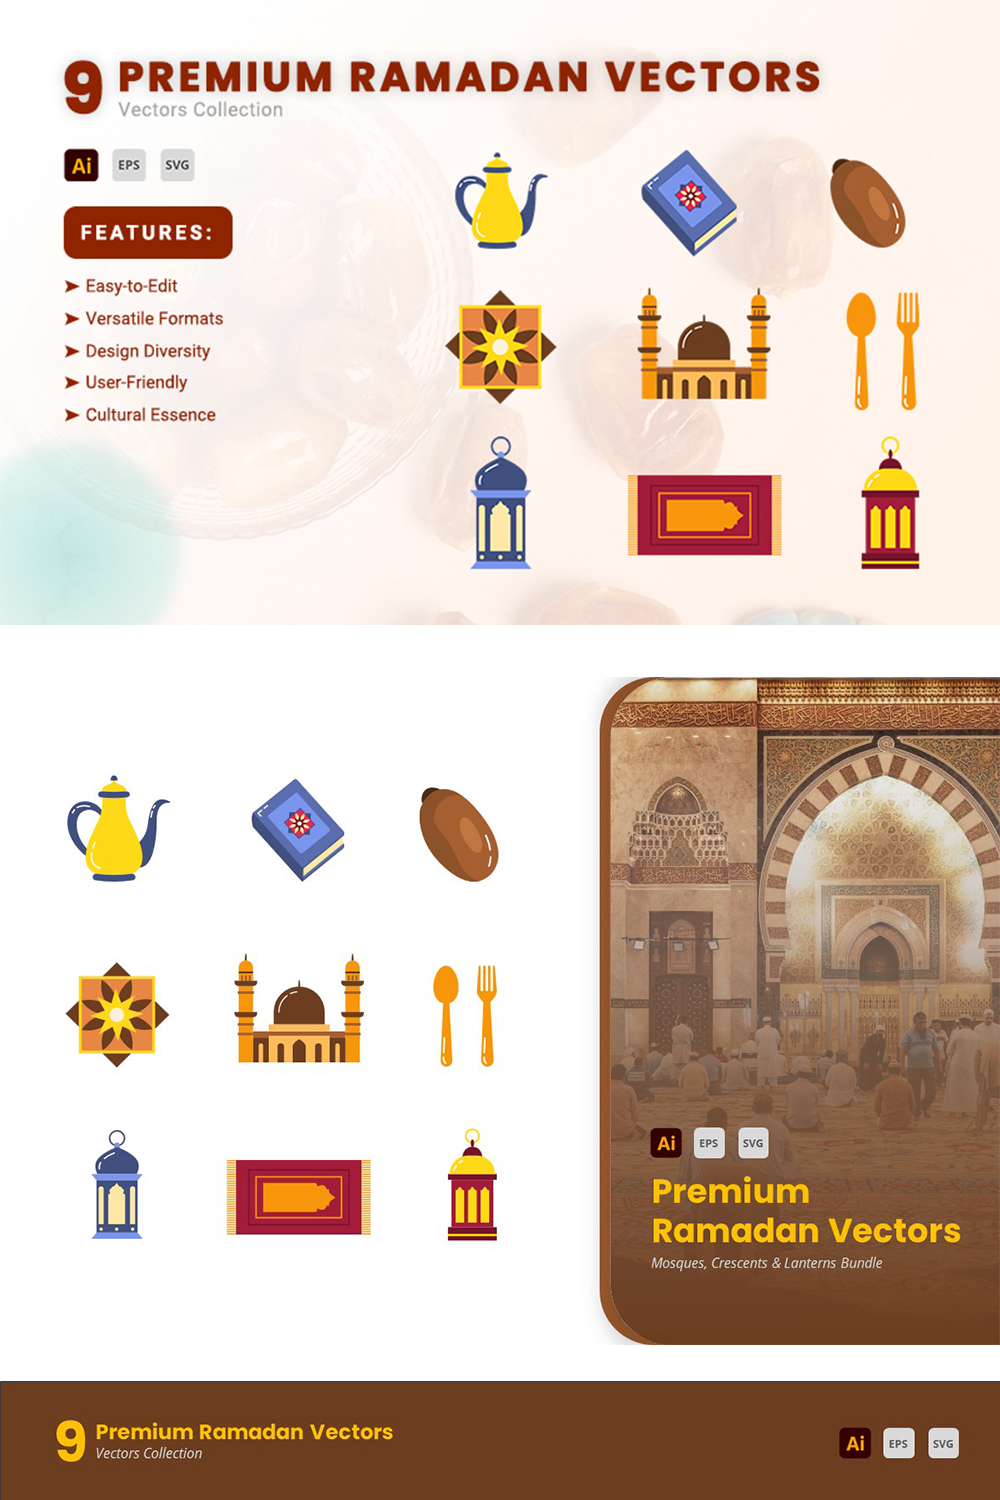 Premium Ramadan Vectors pinterest preview image.